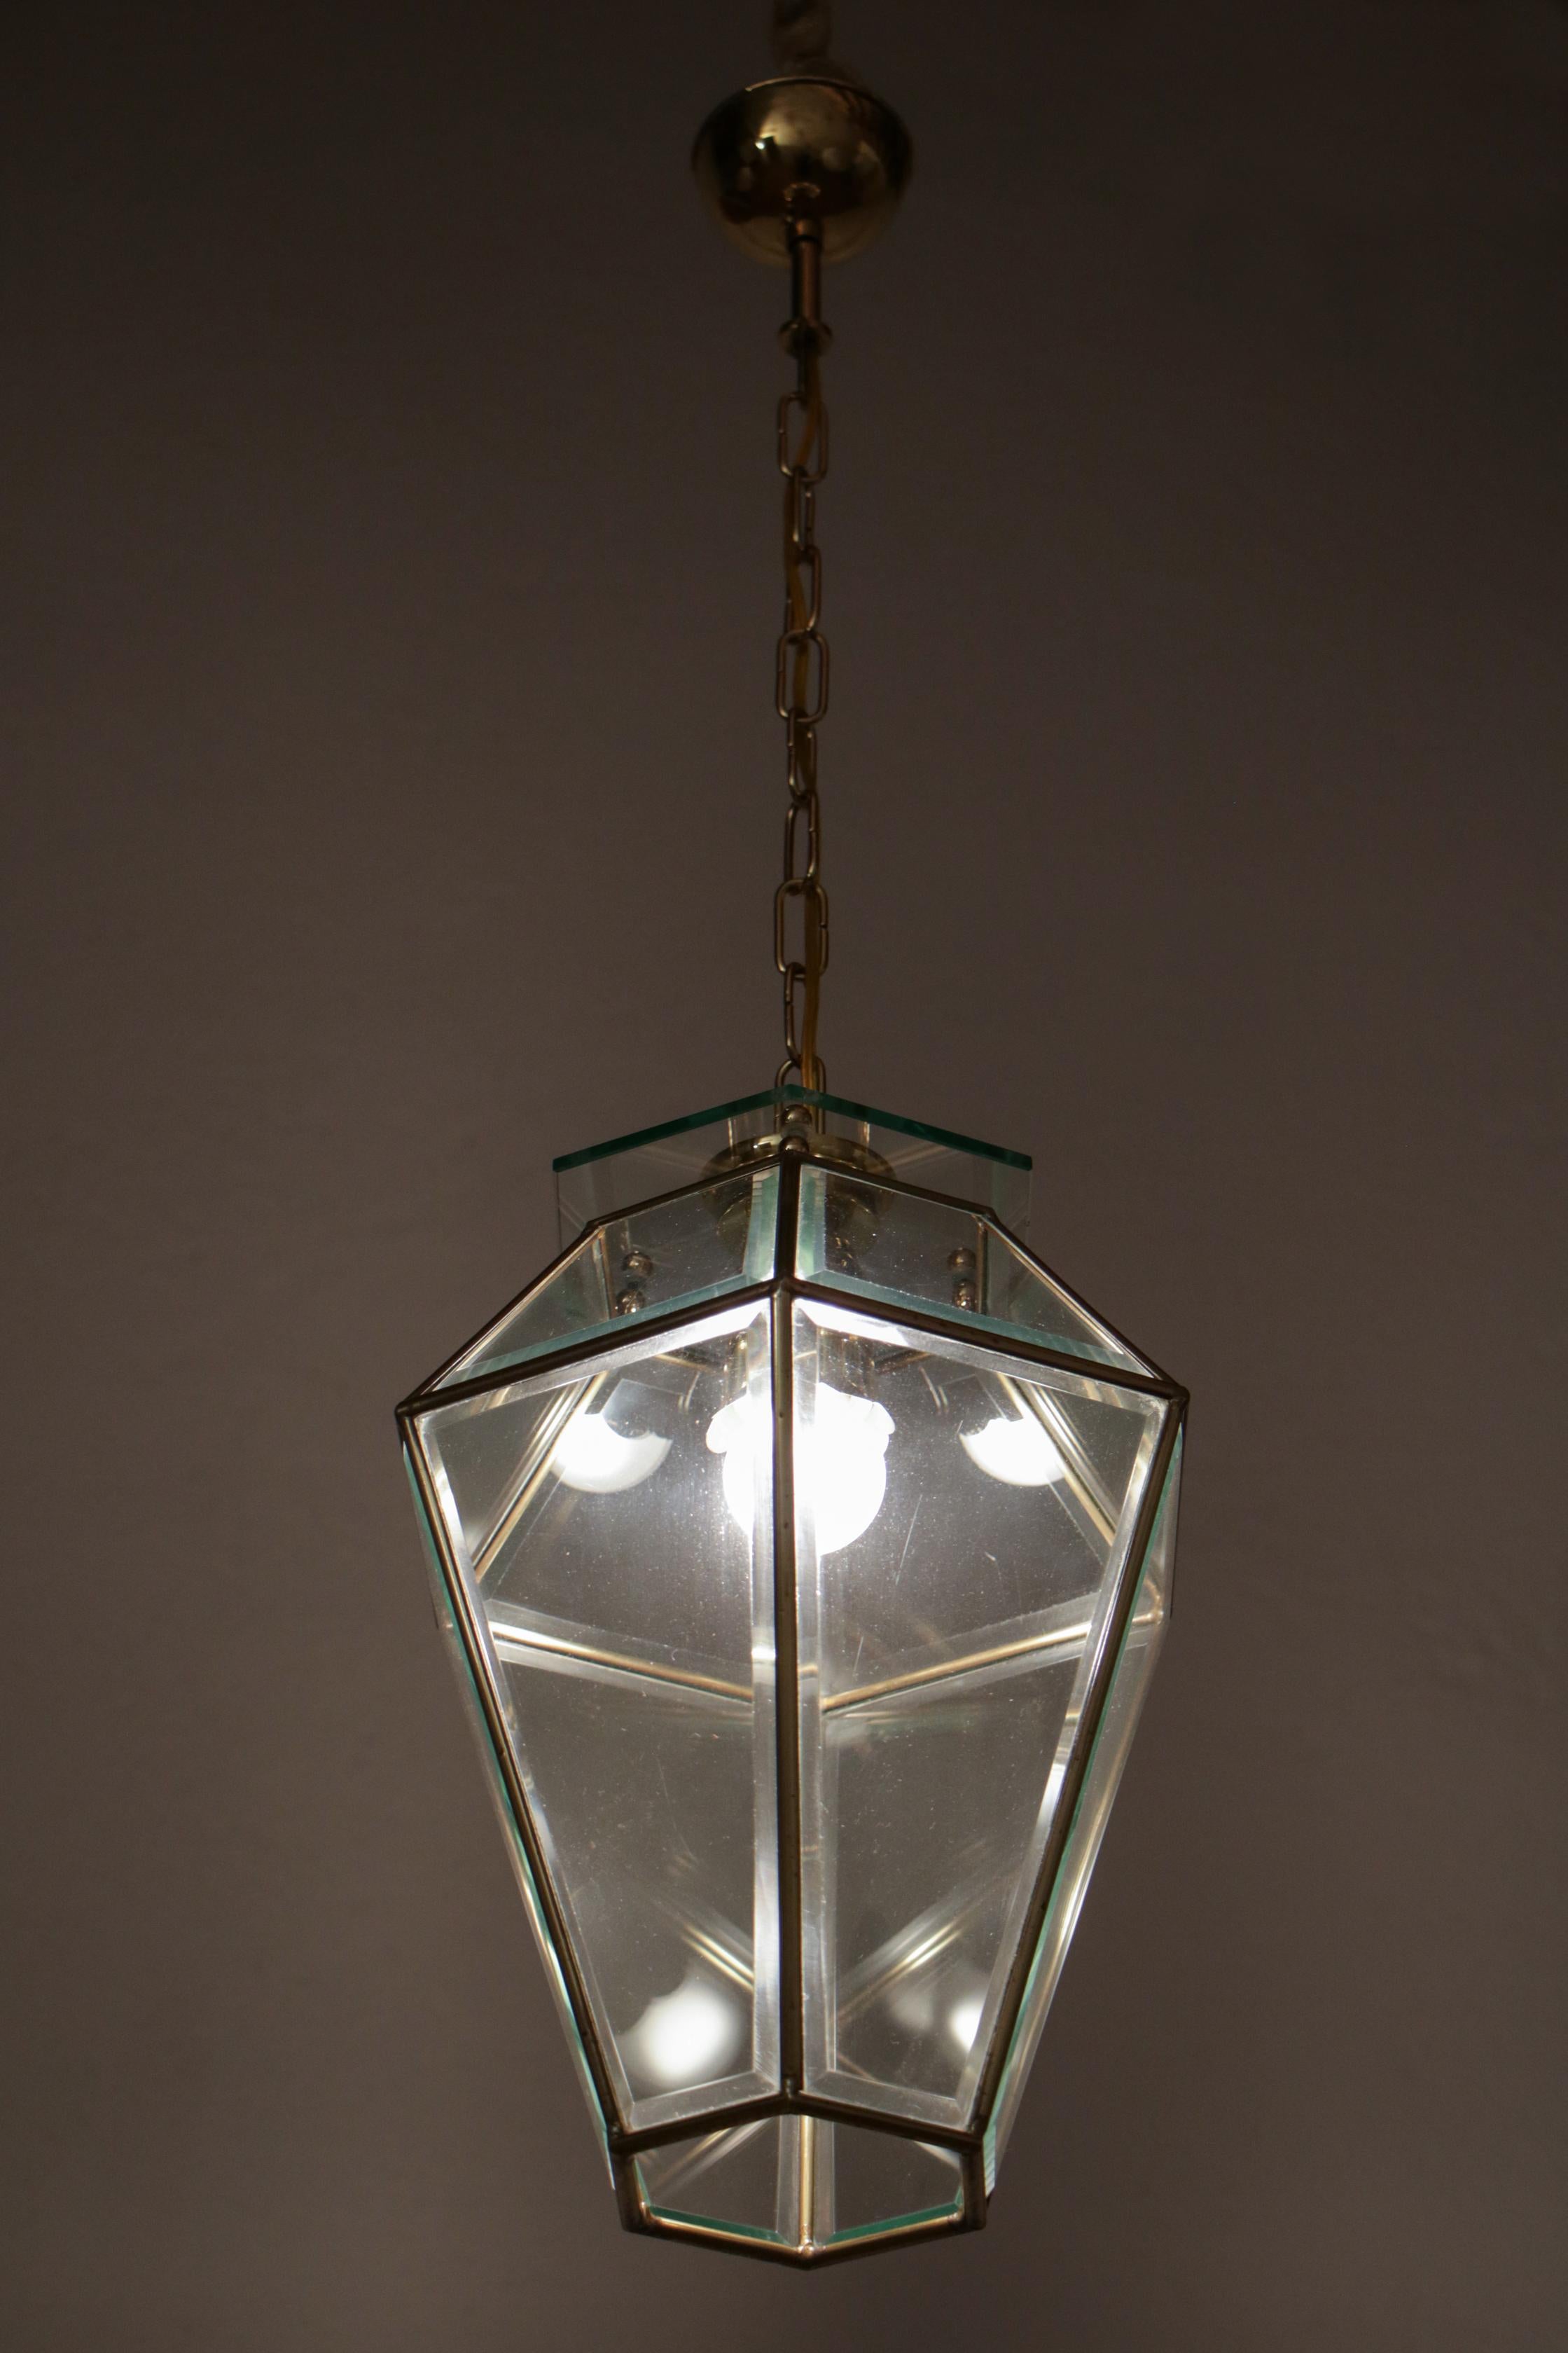 Italian Midcentury Lanter Pendant Lamp, Adolf Loos Style, 1950s For Sale 6